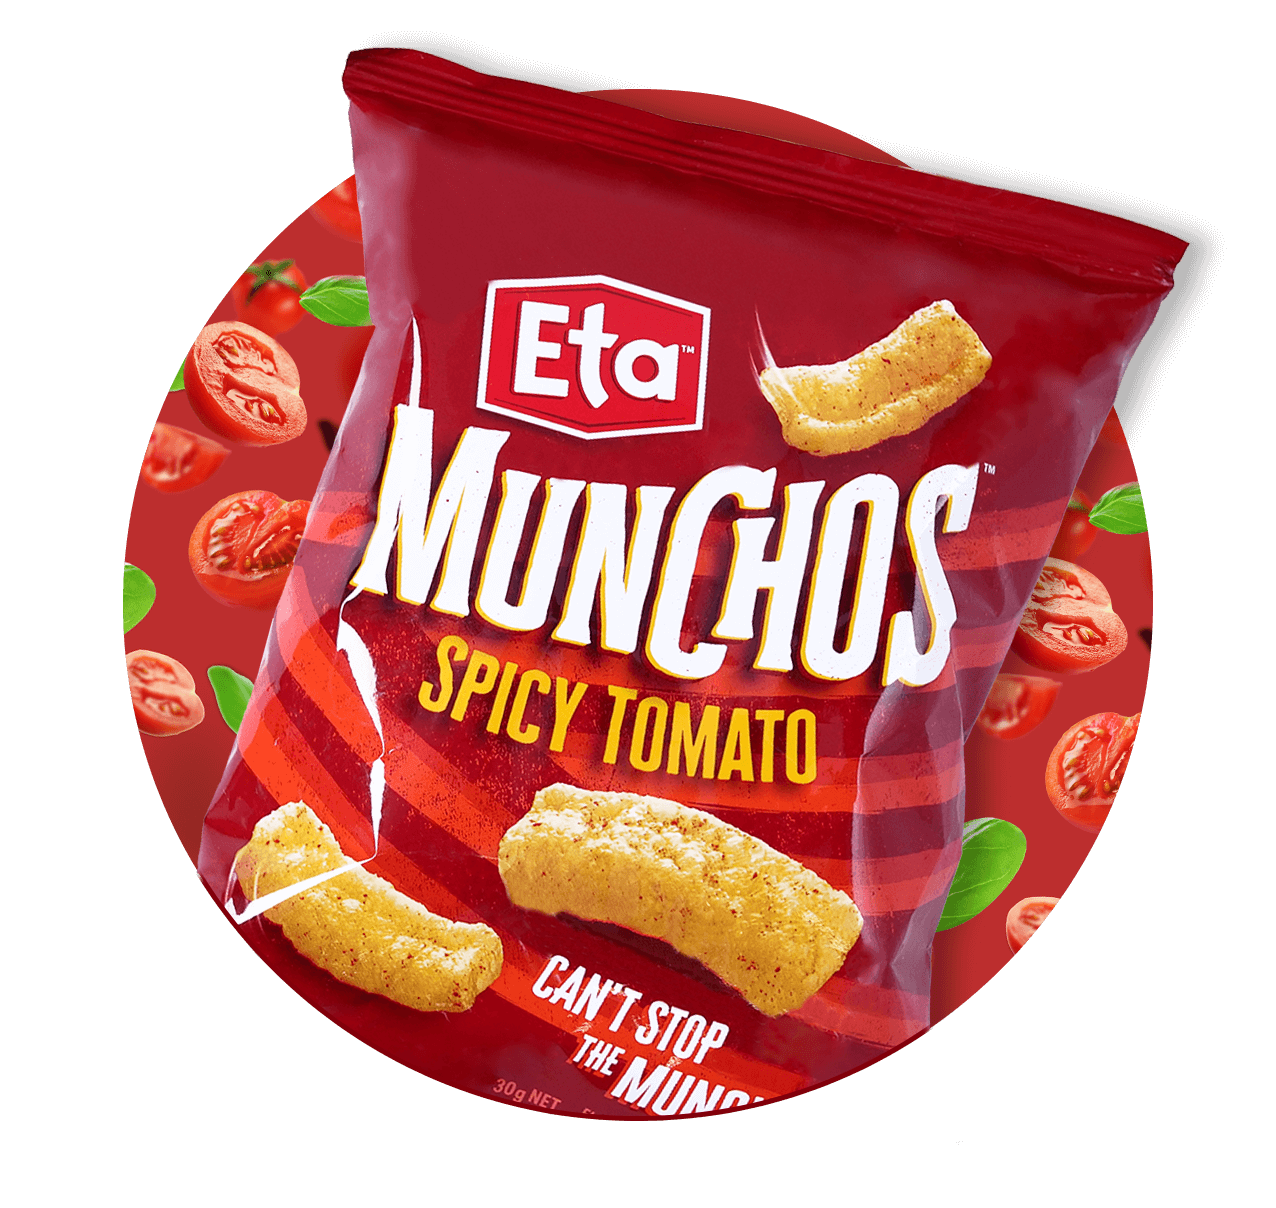 Munchos Spicy Tomato